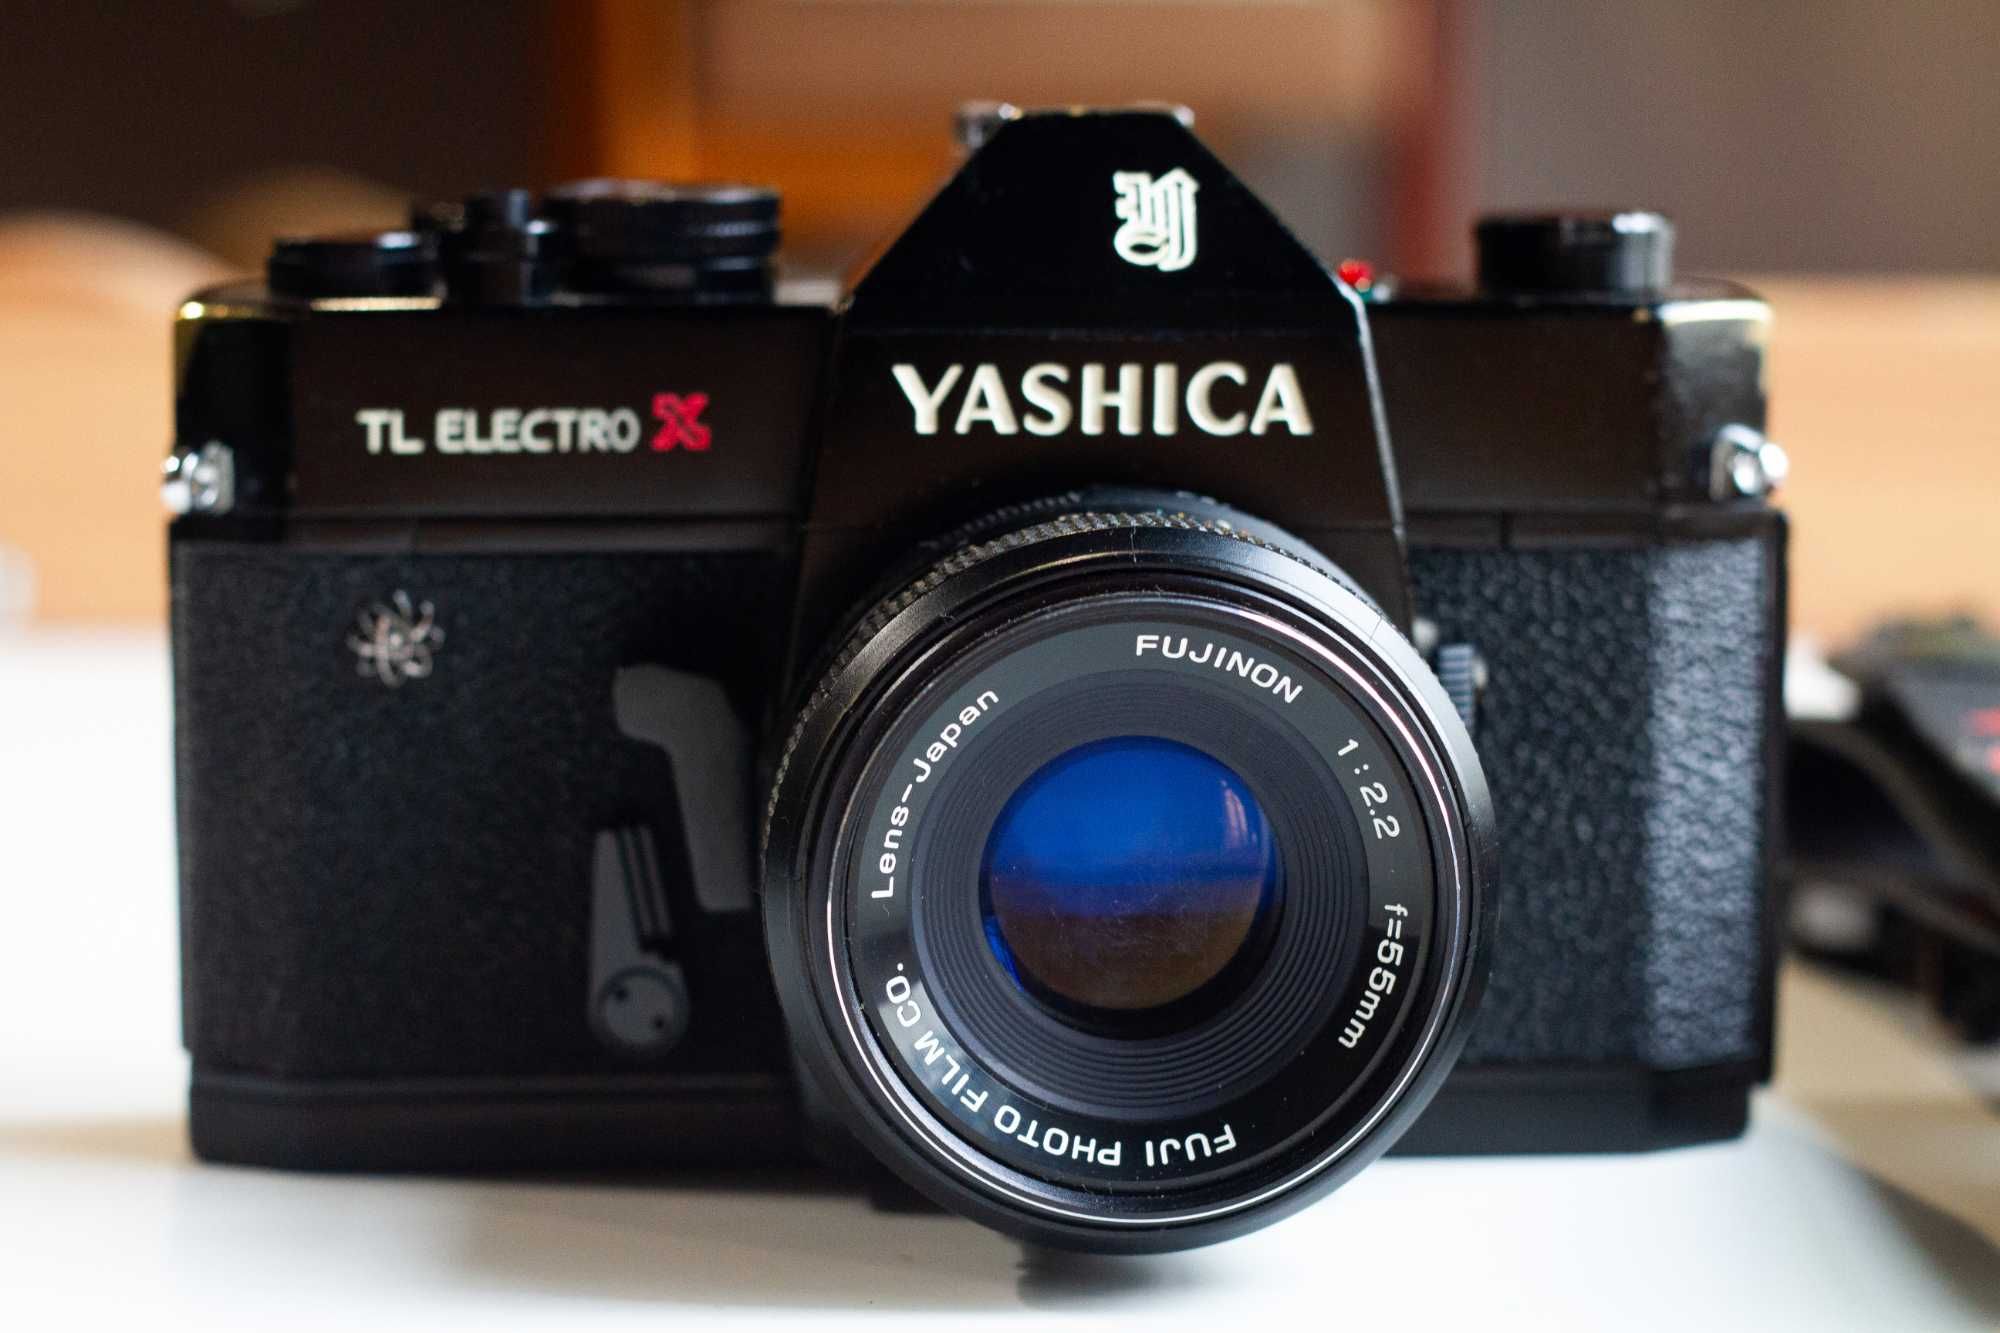 Yashica TL Electro X + Fujinon 55mm f2.2